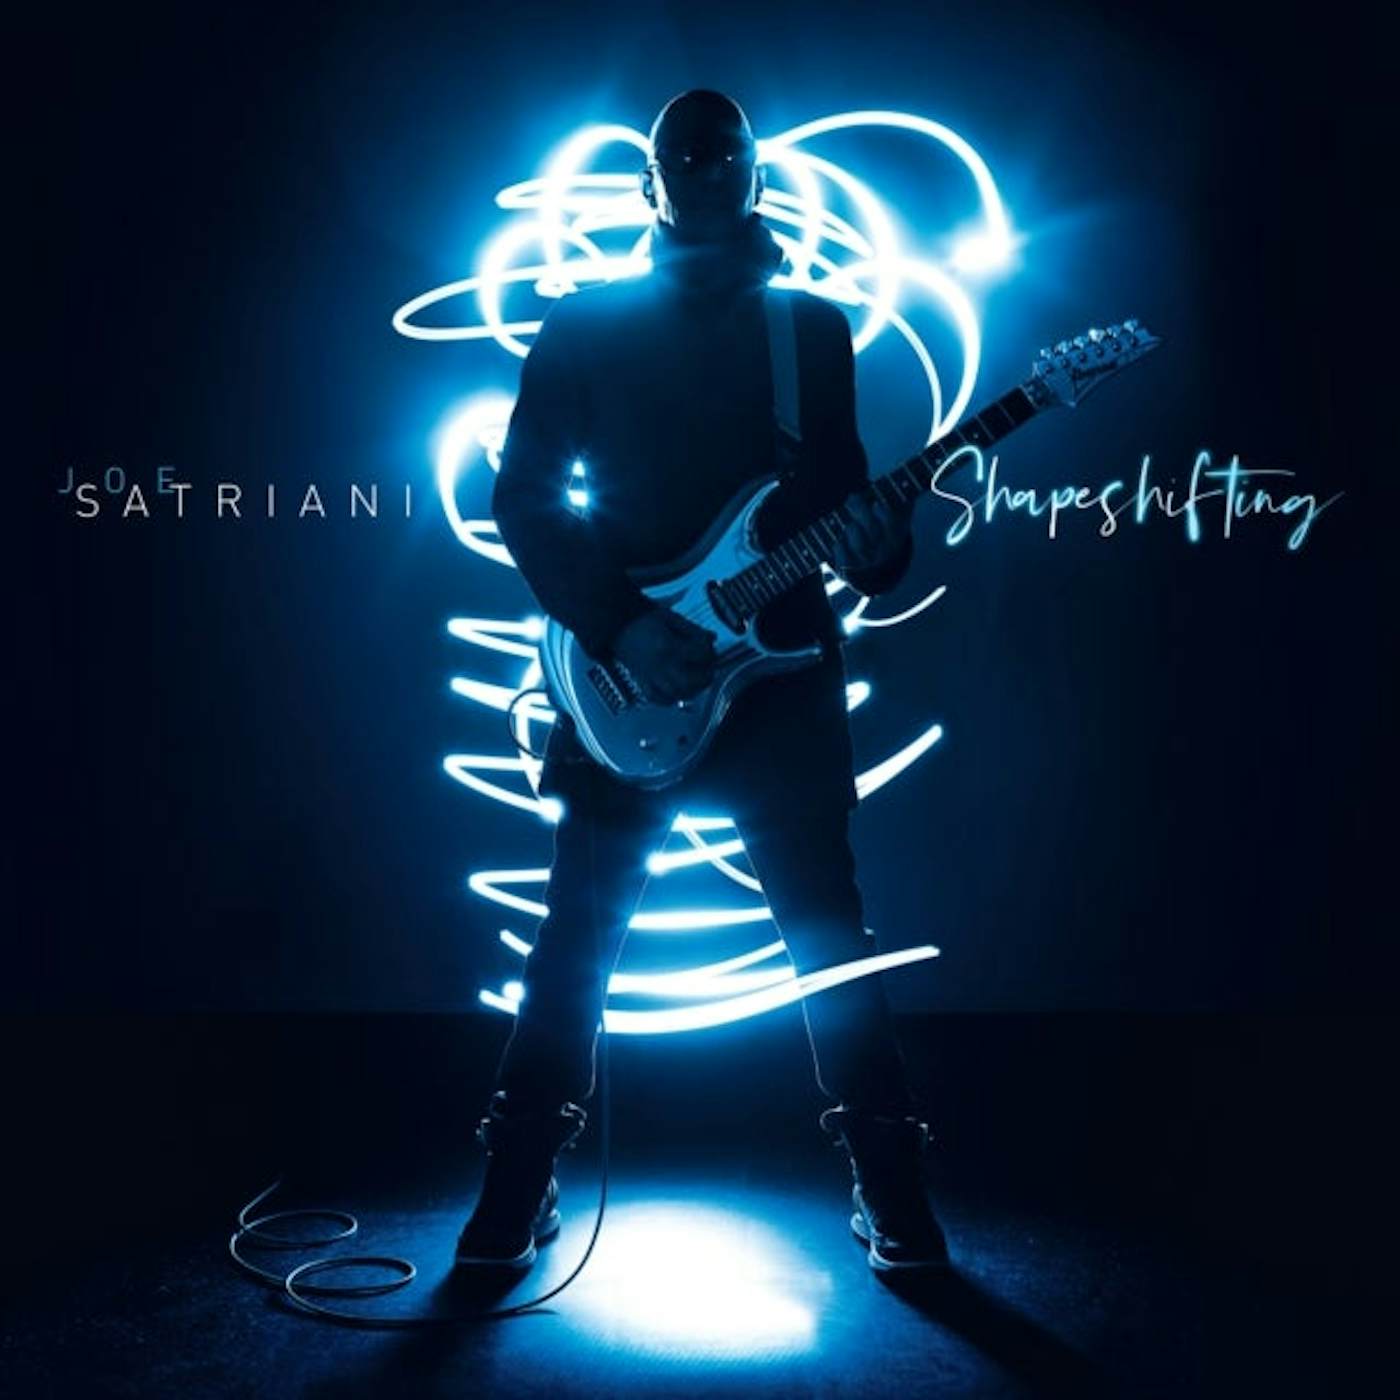 Joe Satriani LP Vinyl Record - Shapeshifting